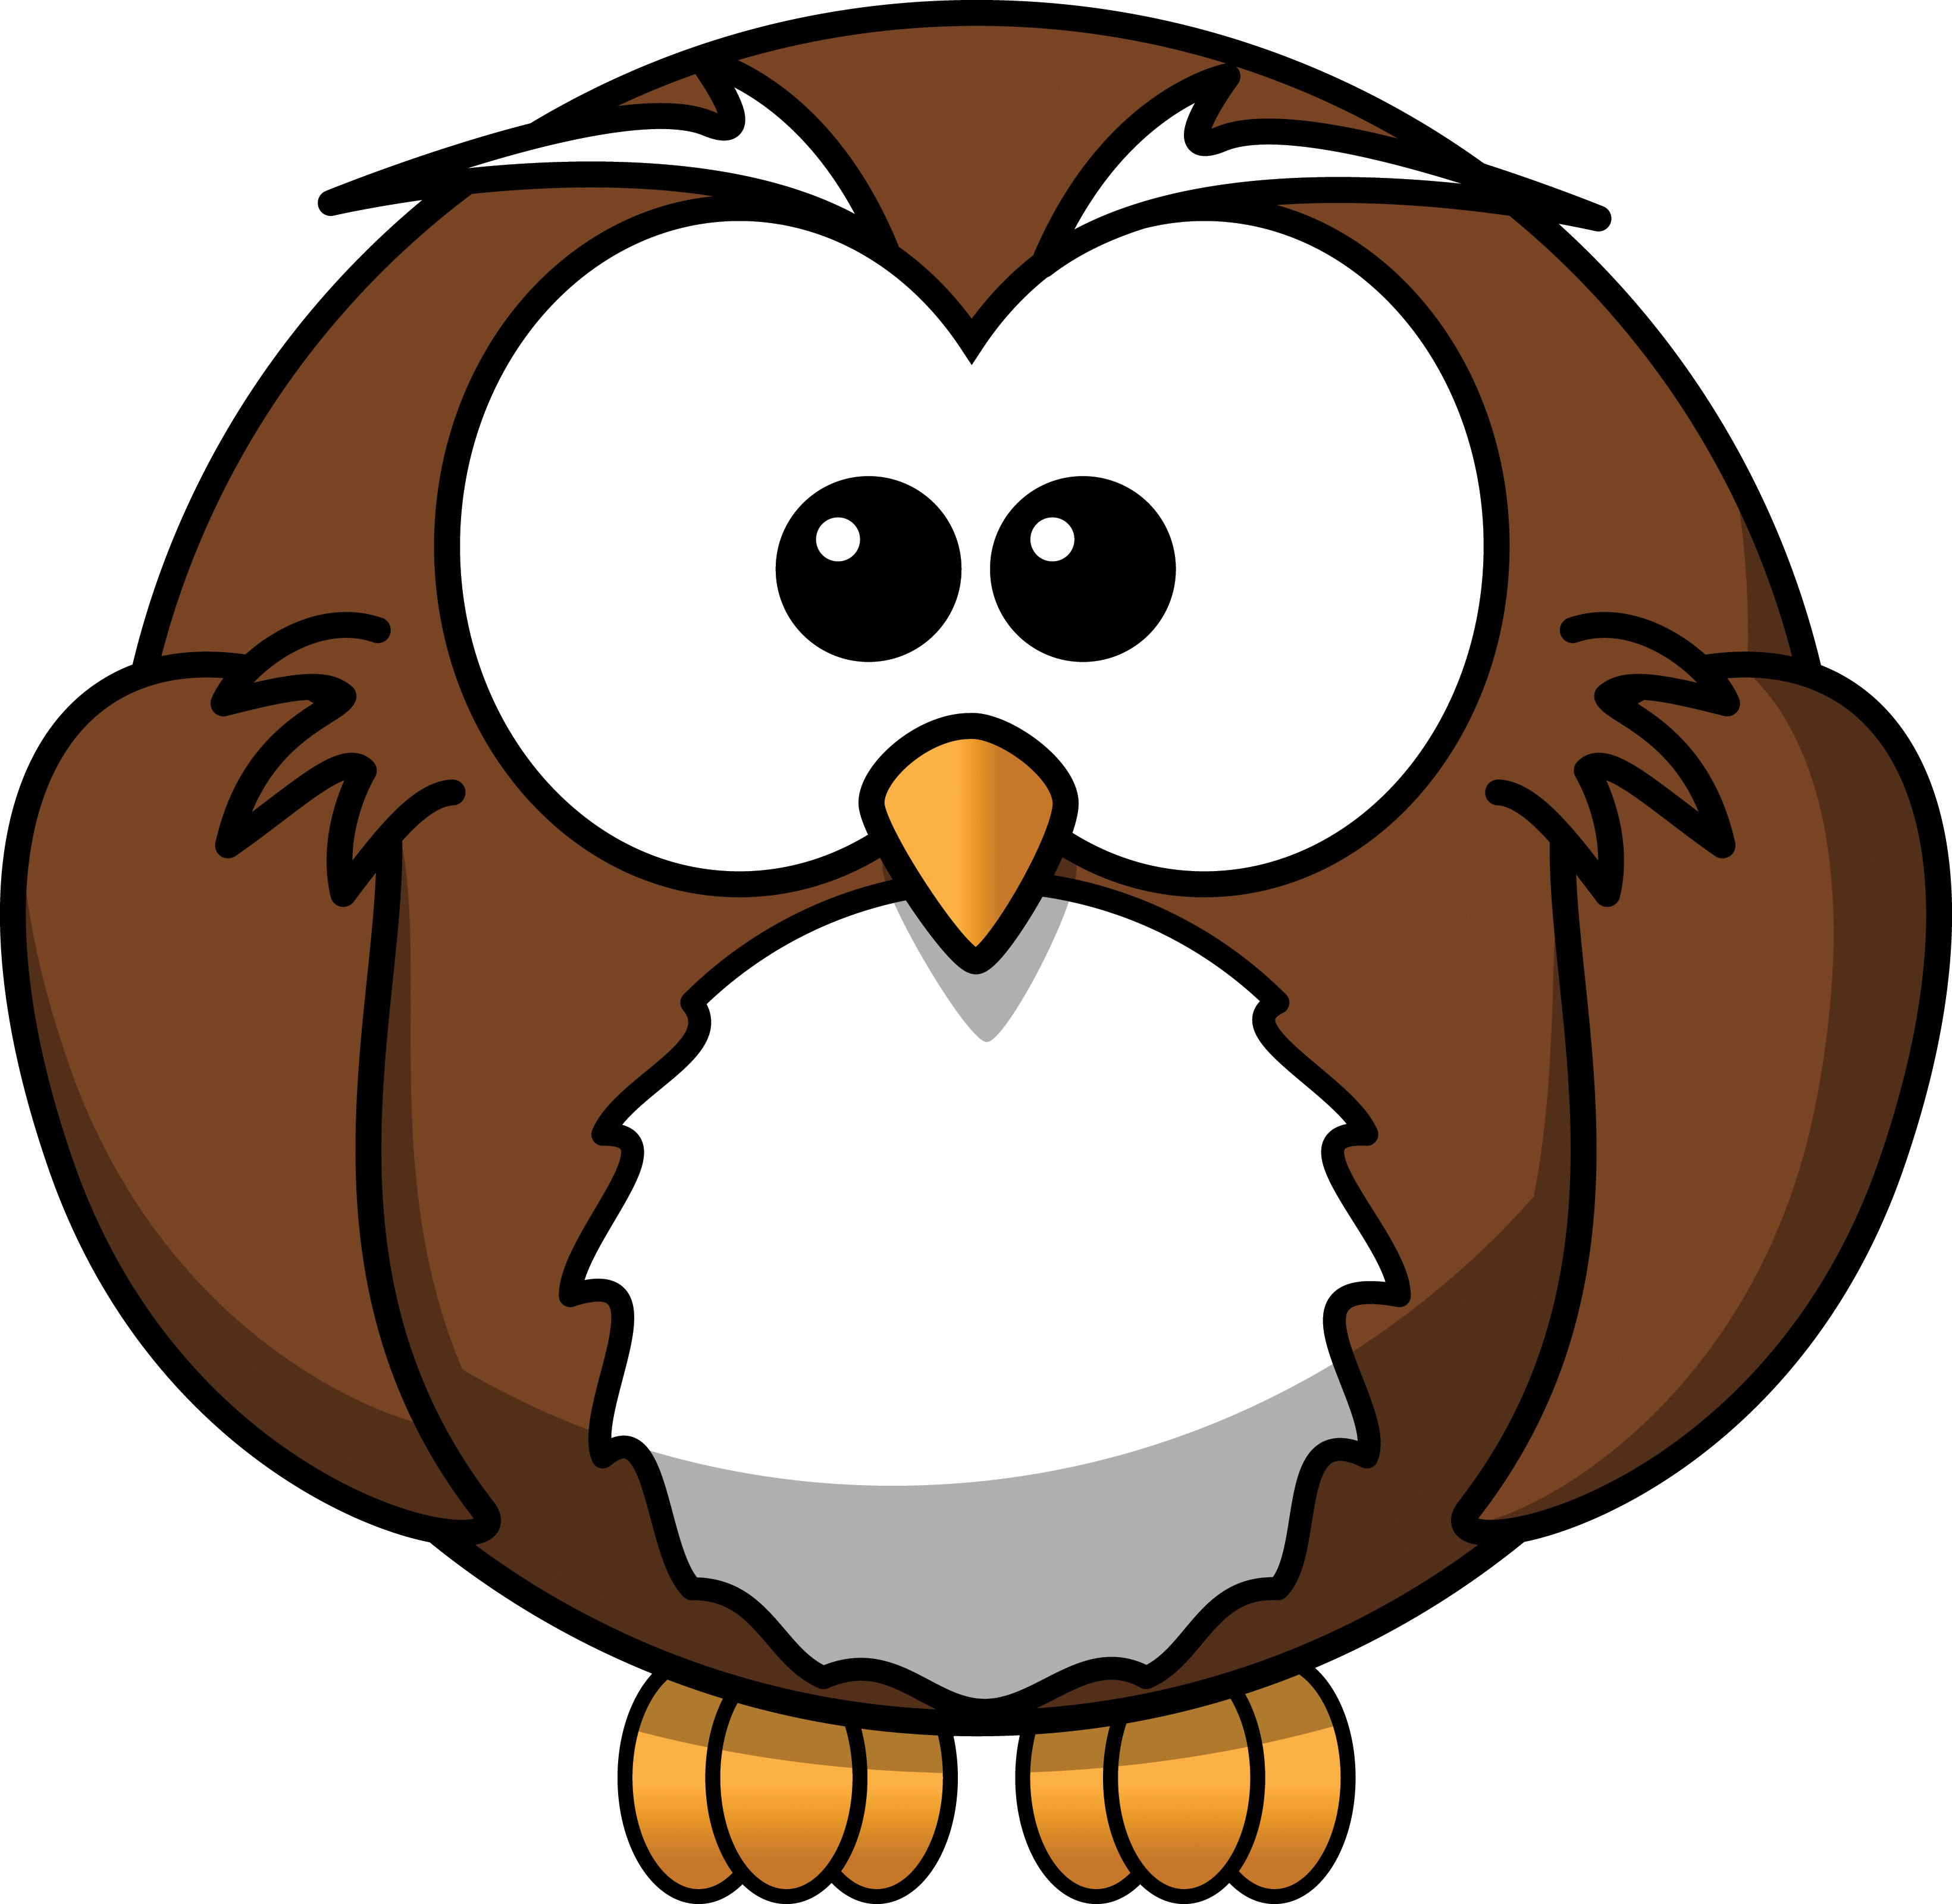 Owl clipart for kids